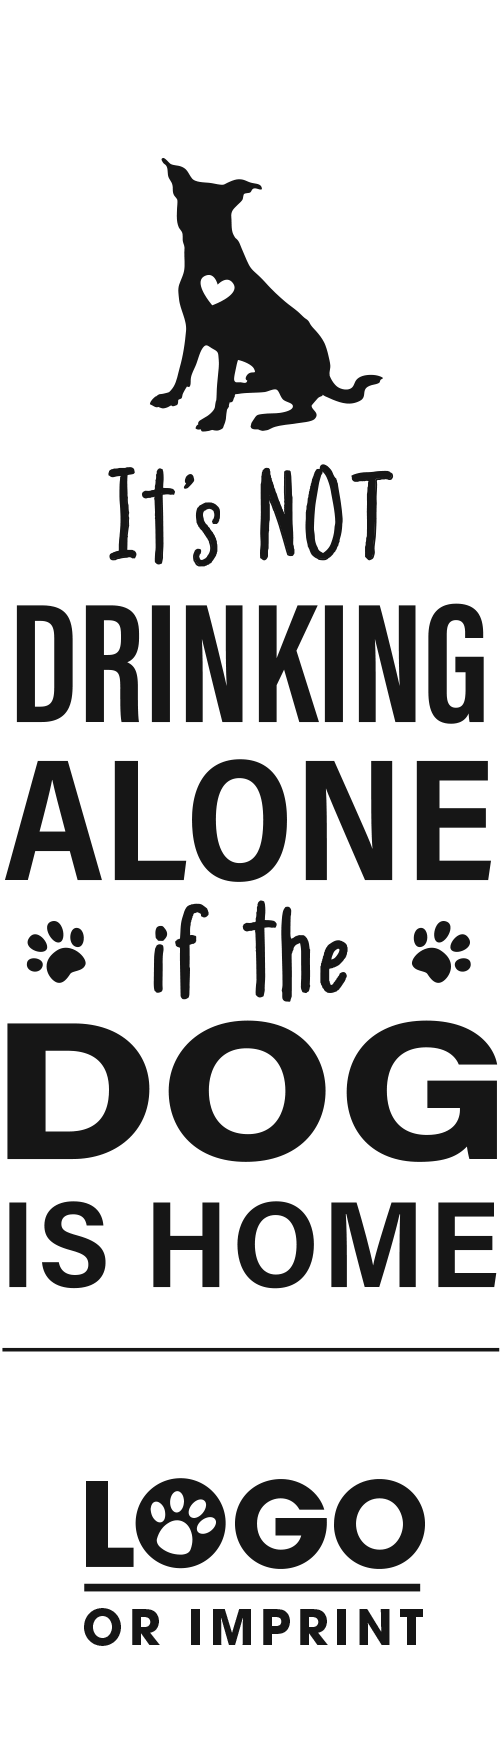 Not Drinking Alone-DOG thumbnail